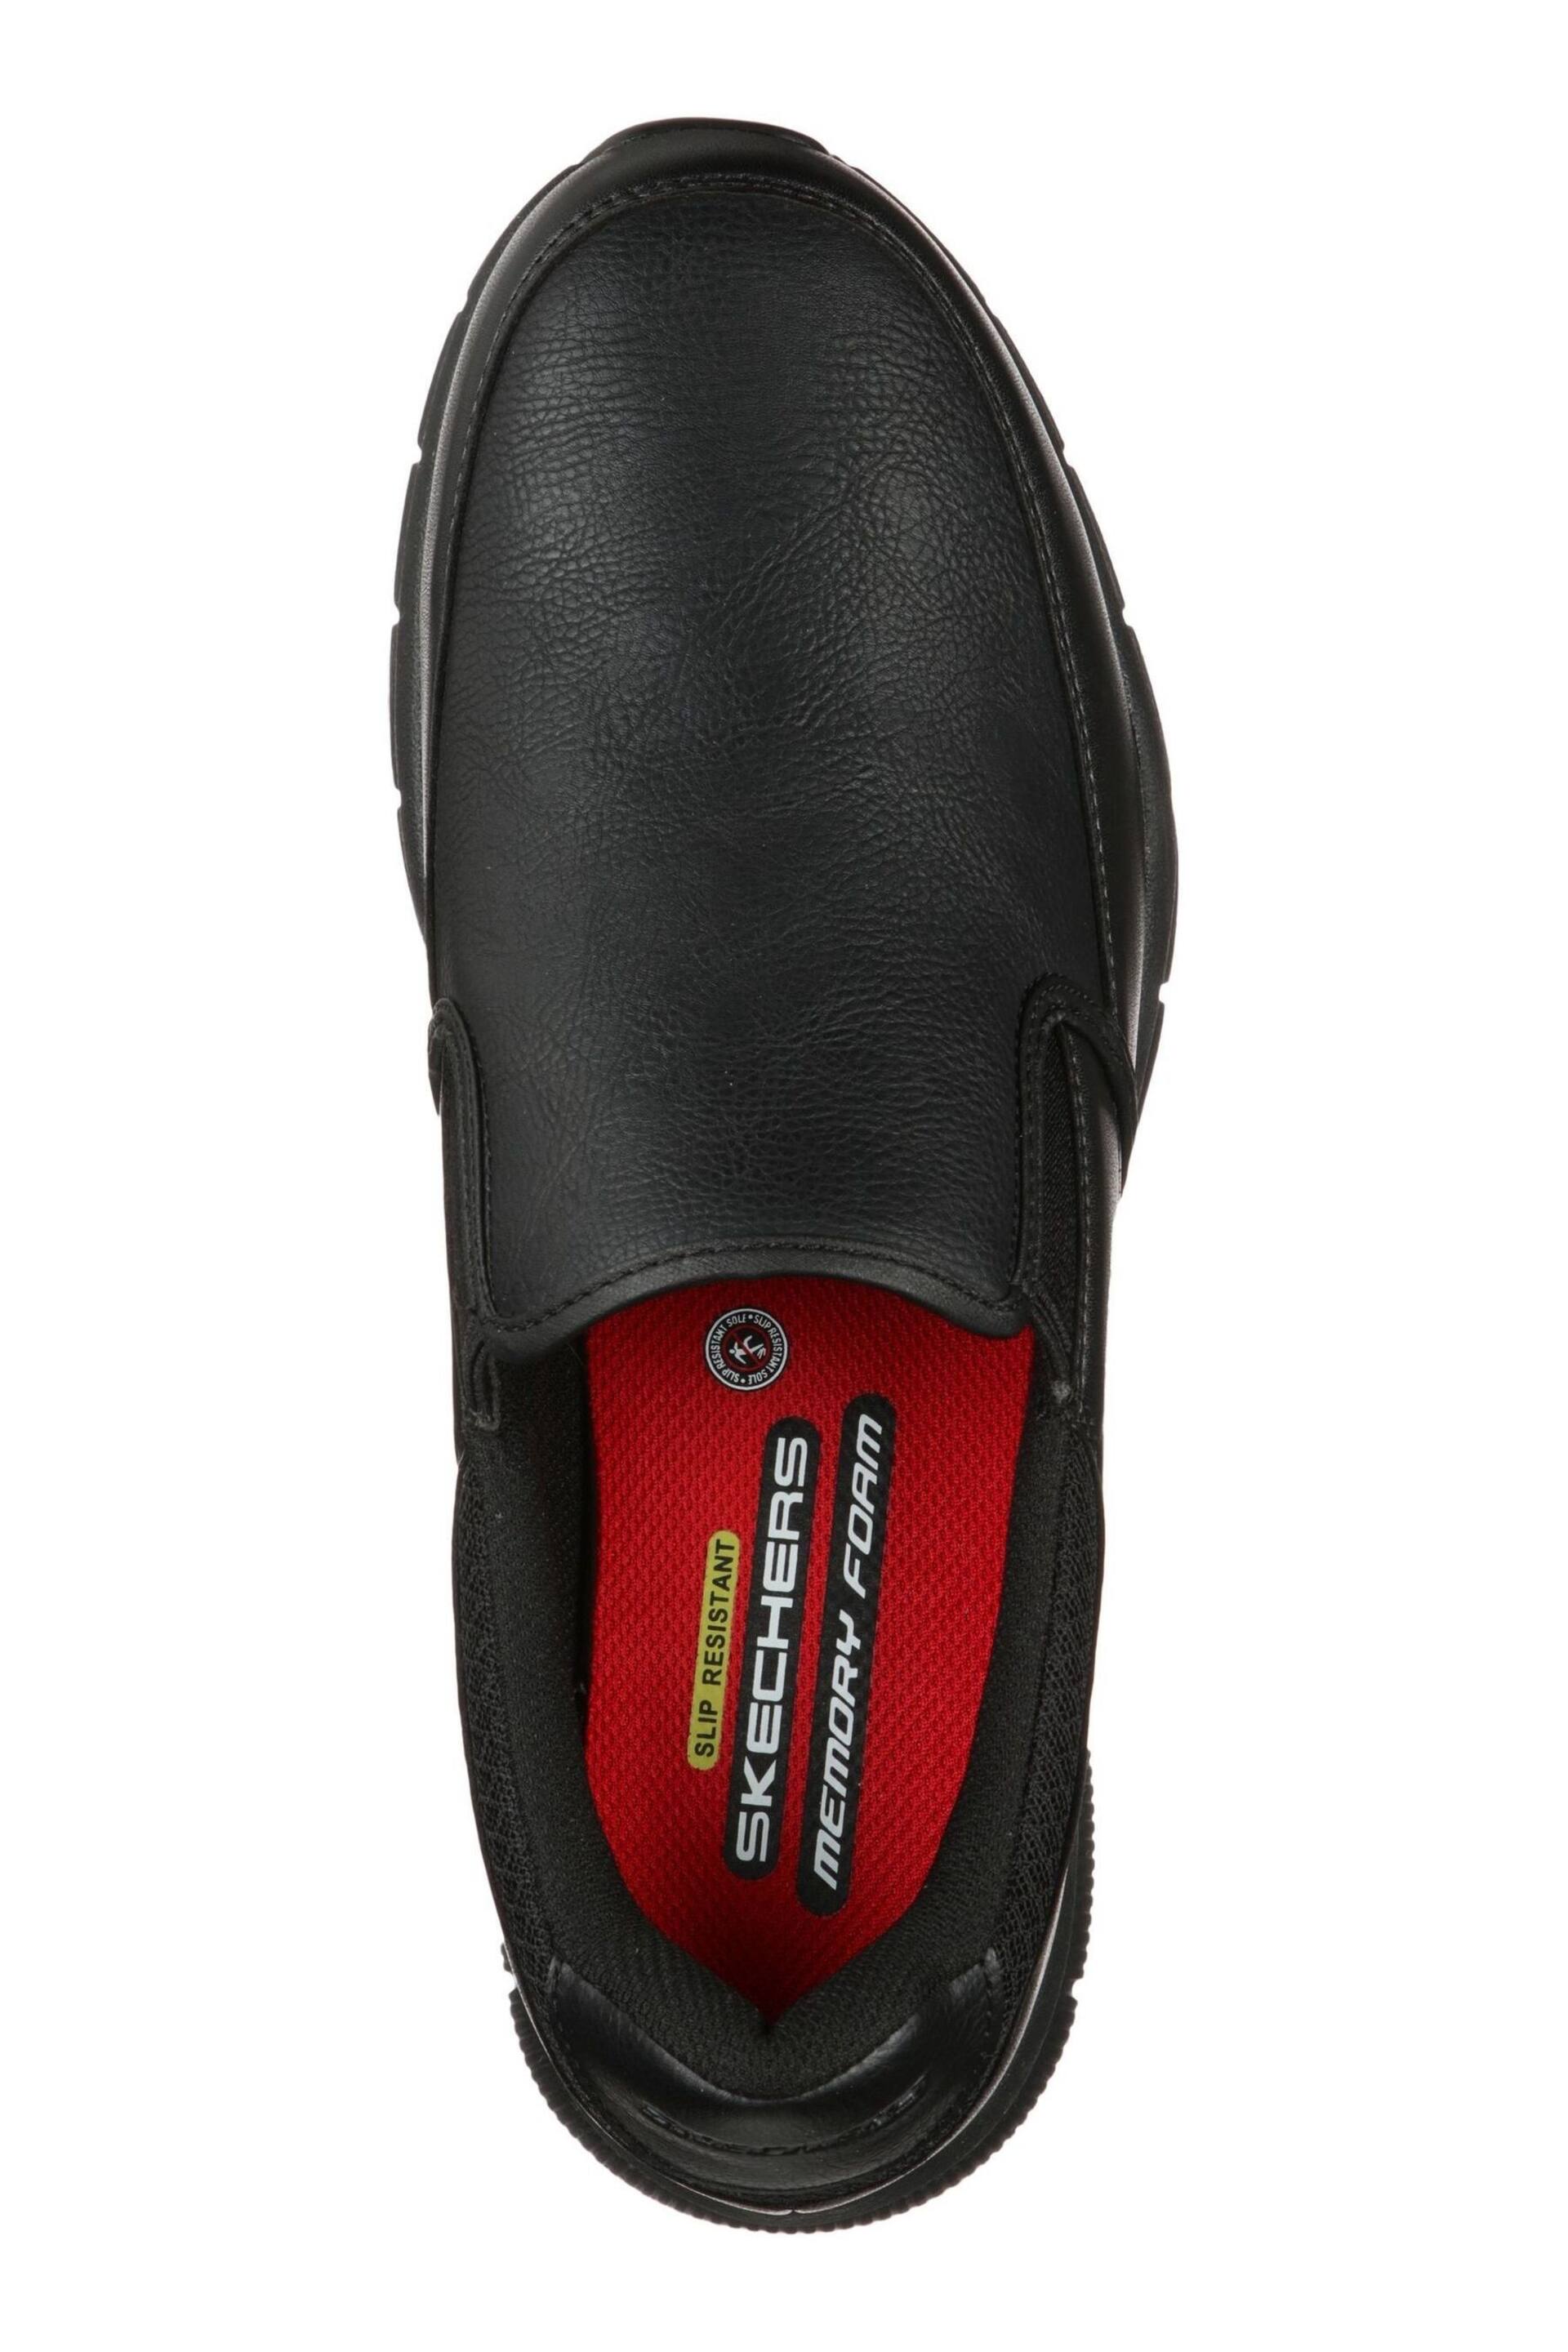 Skechers Black Nampa Groton Slip Resistant Slip On Mens Shoes - Image 5 of 5